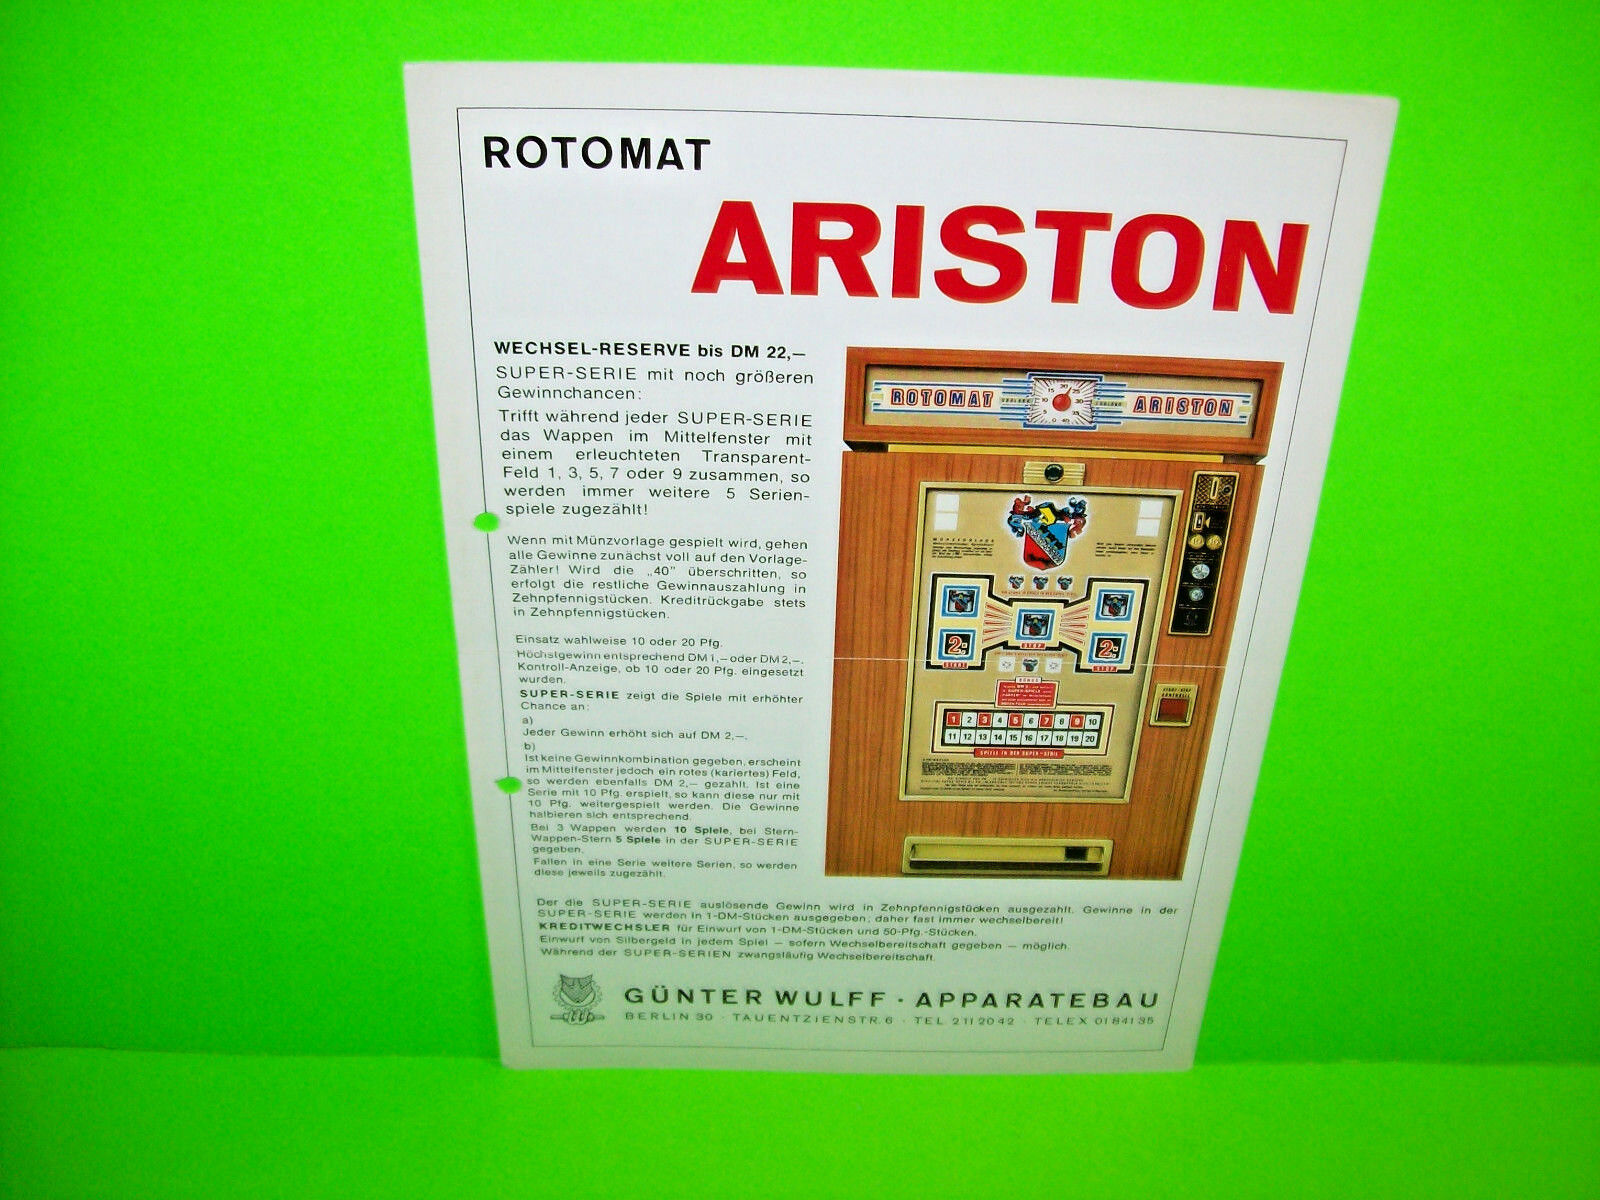 ROTOMAT Ariston Original Vintage German Text Slot Machine Promo Sales Flyer